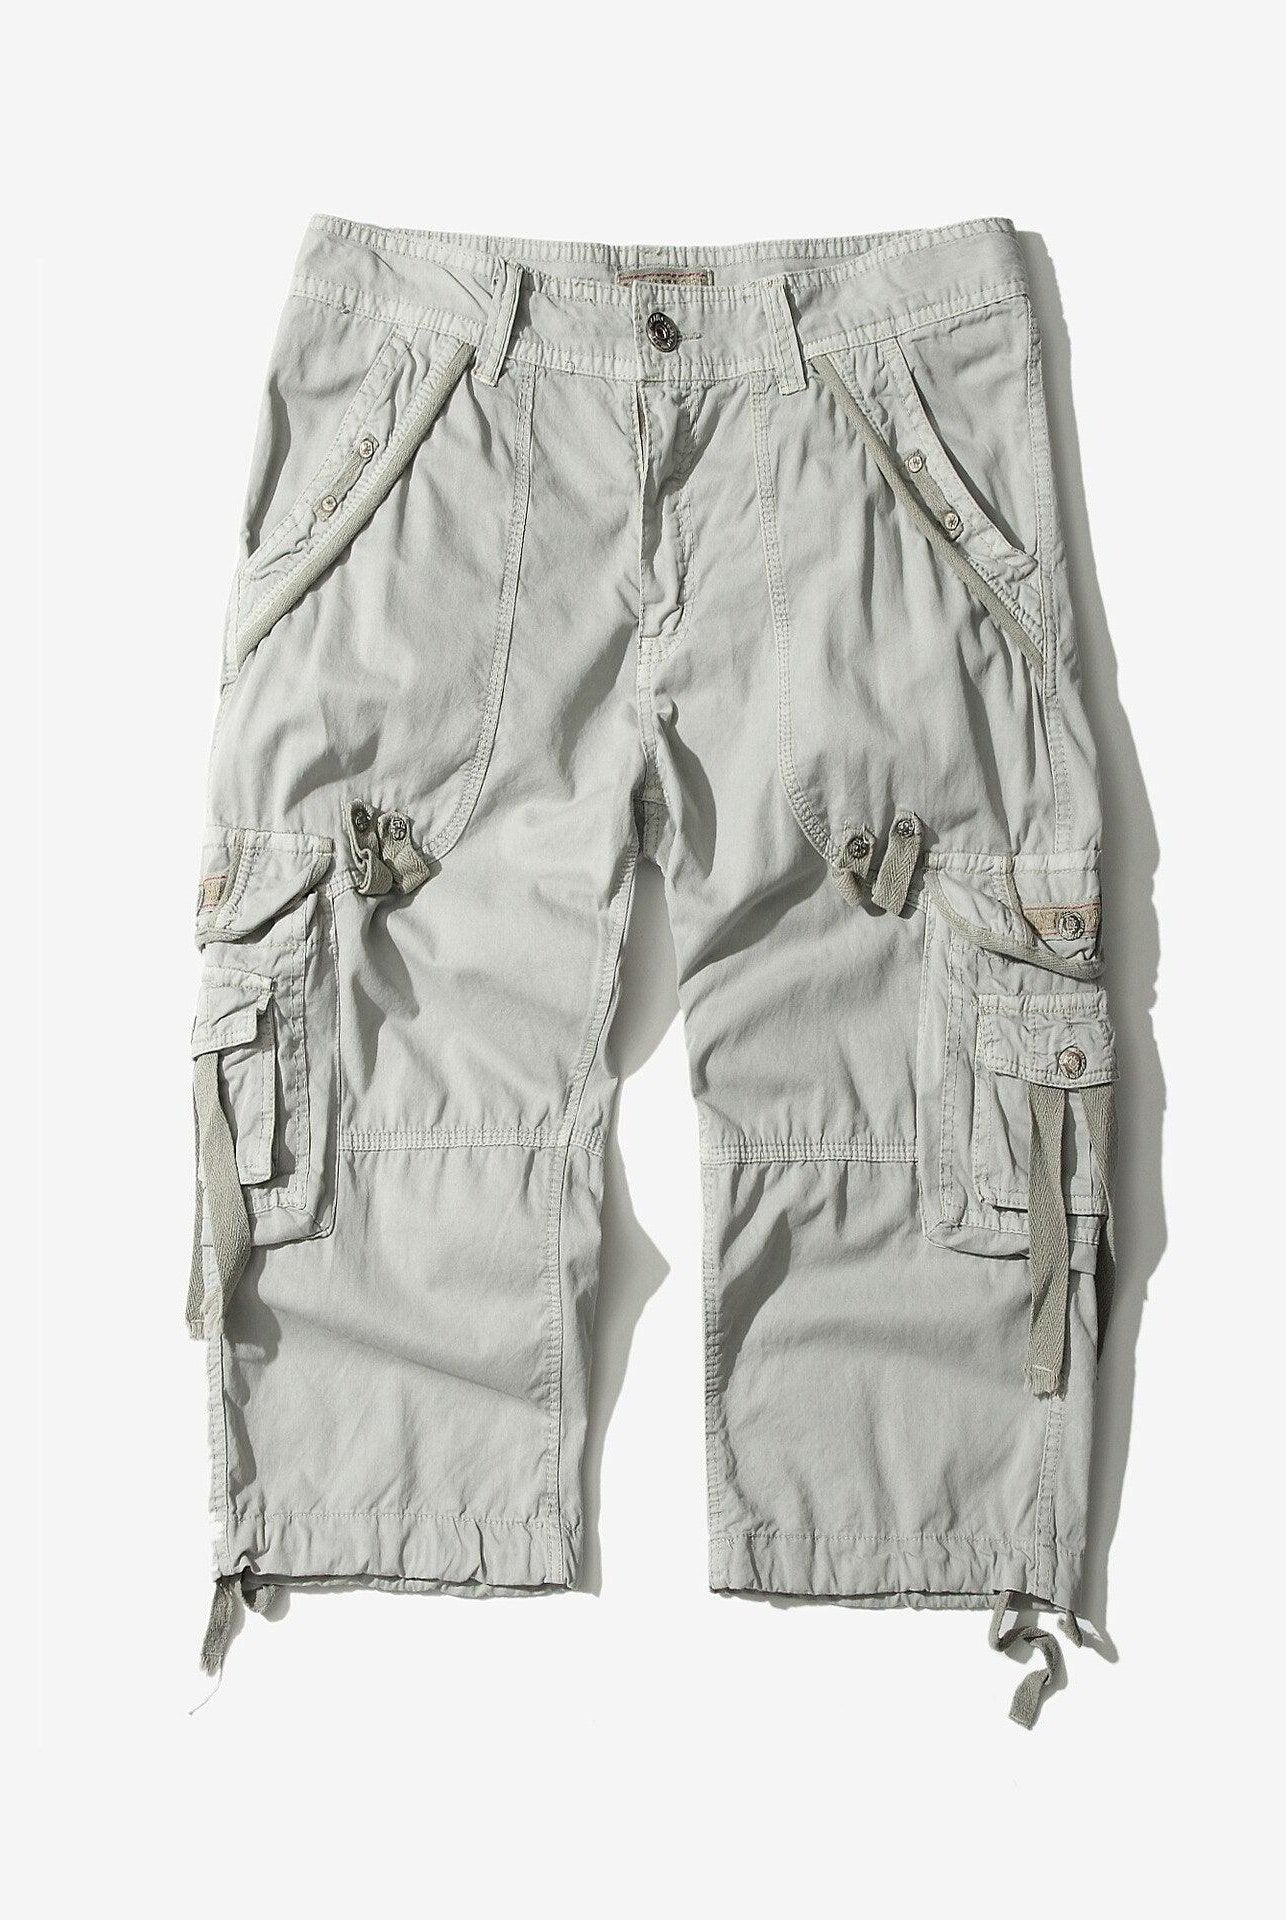 Men's Shorts Mens Casual Summer Cargo Shorts Multi-Pocket Calf-Length Shorts